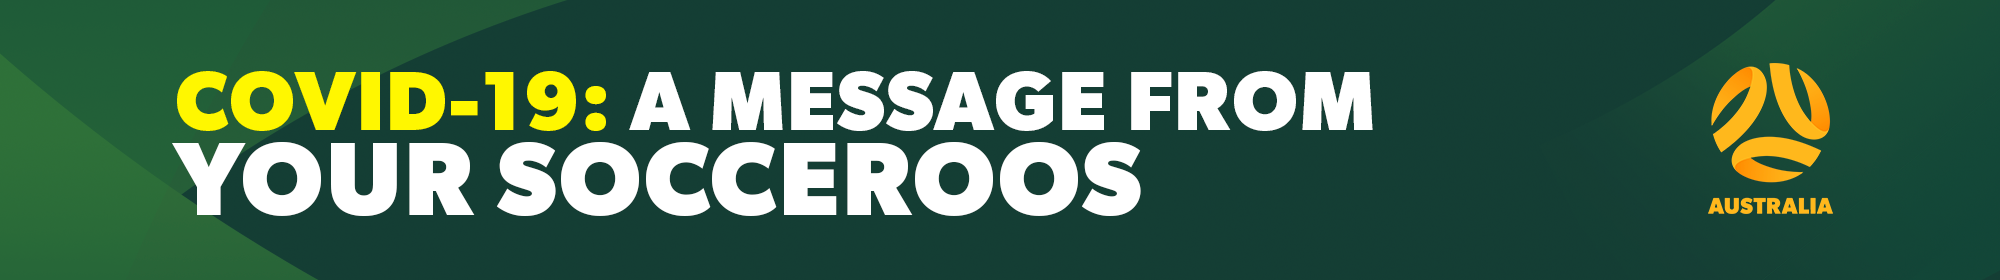 COVID-19-Message-Socceroos